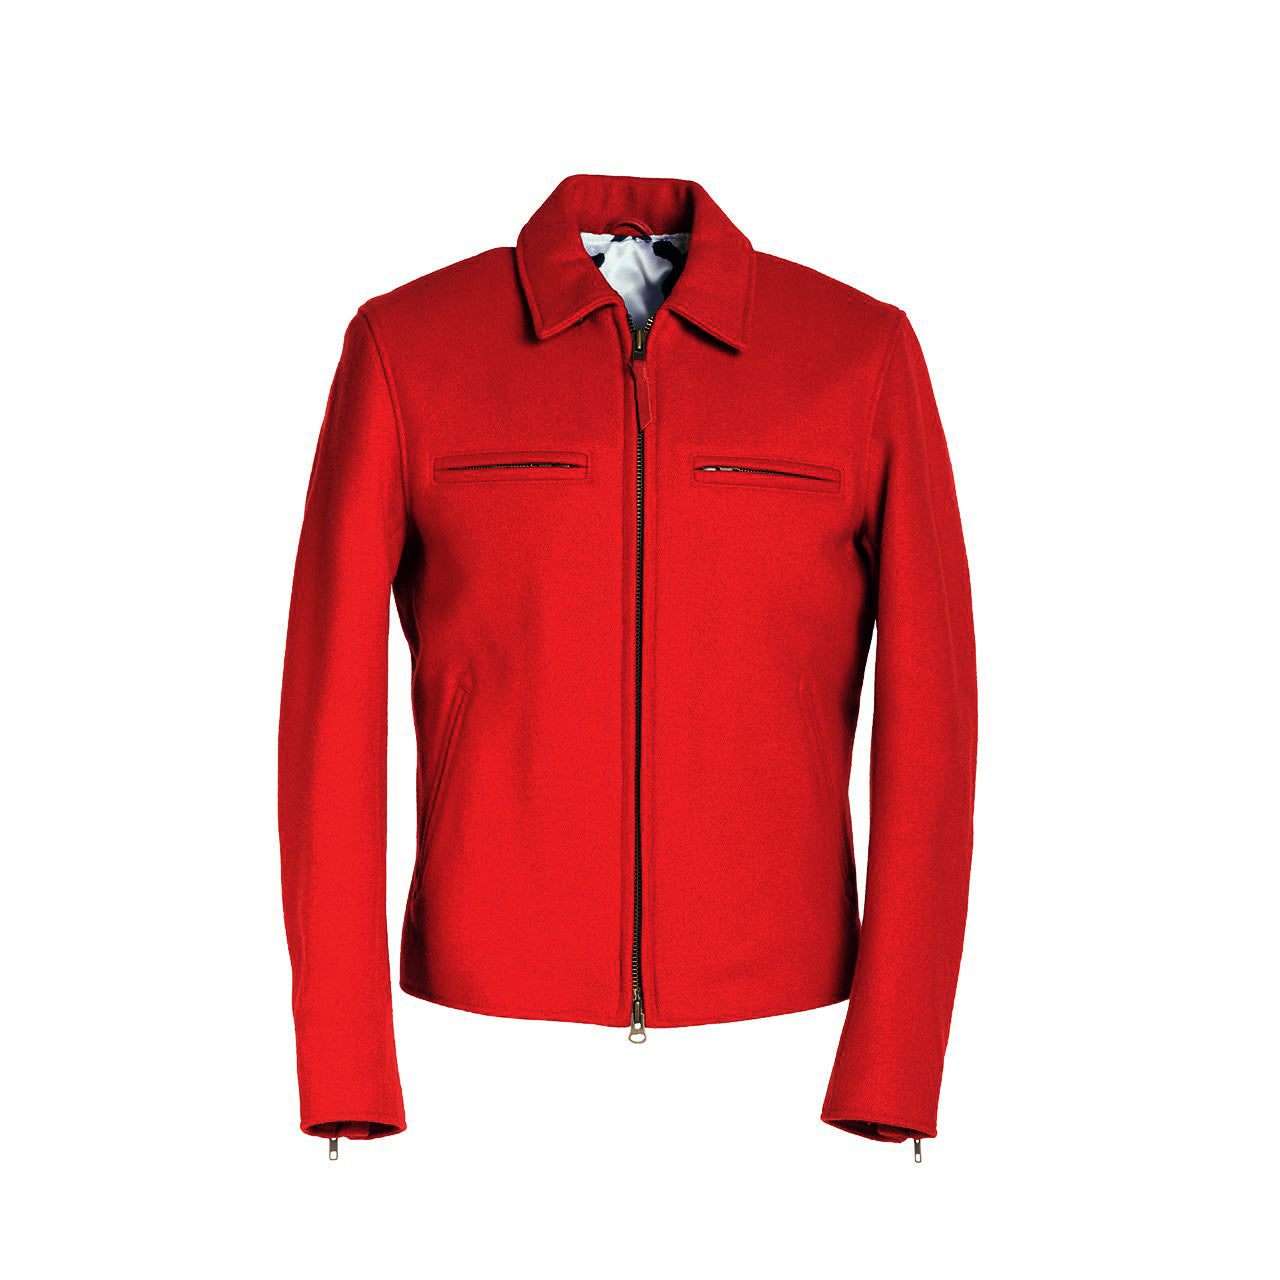 Beaufort Dockworker Jacket in Red